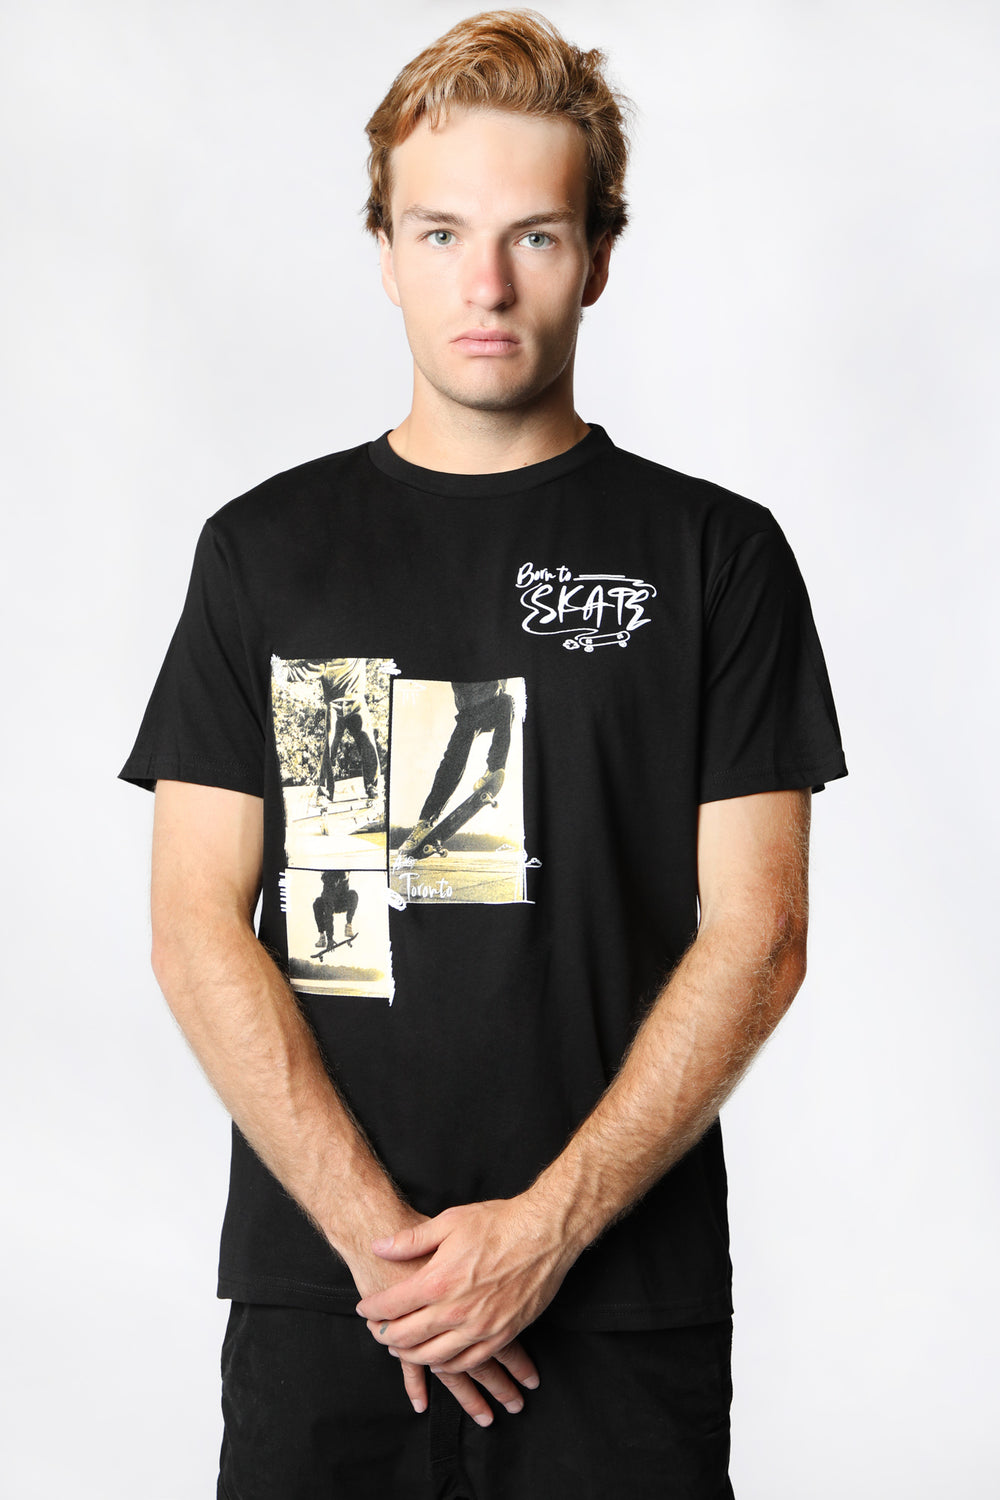 T-Shirt Imprimé Born To Skate Zoo York Homme Noir